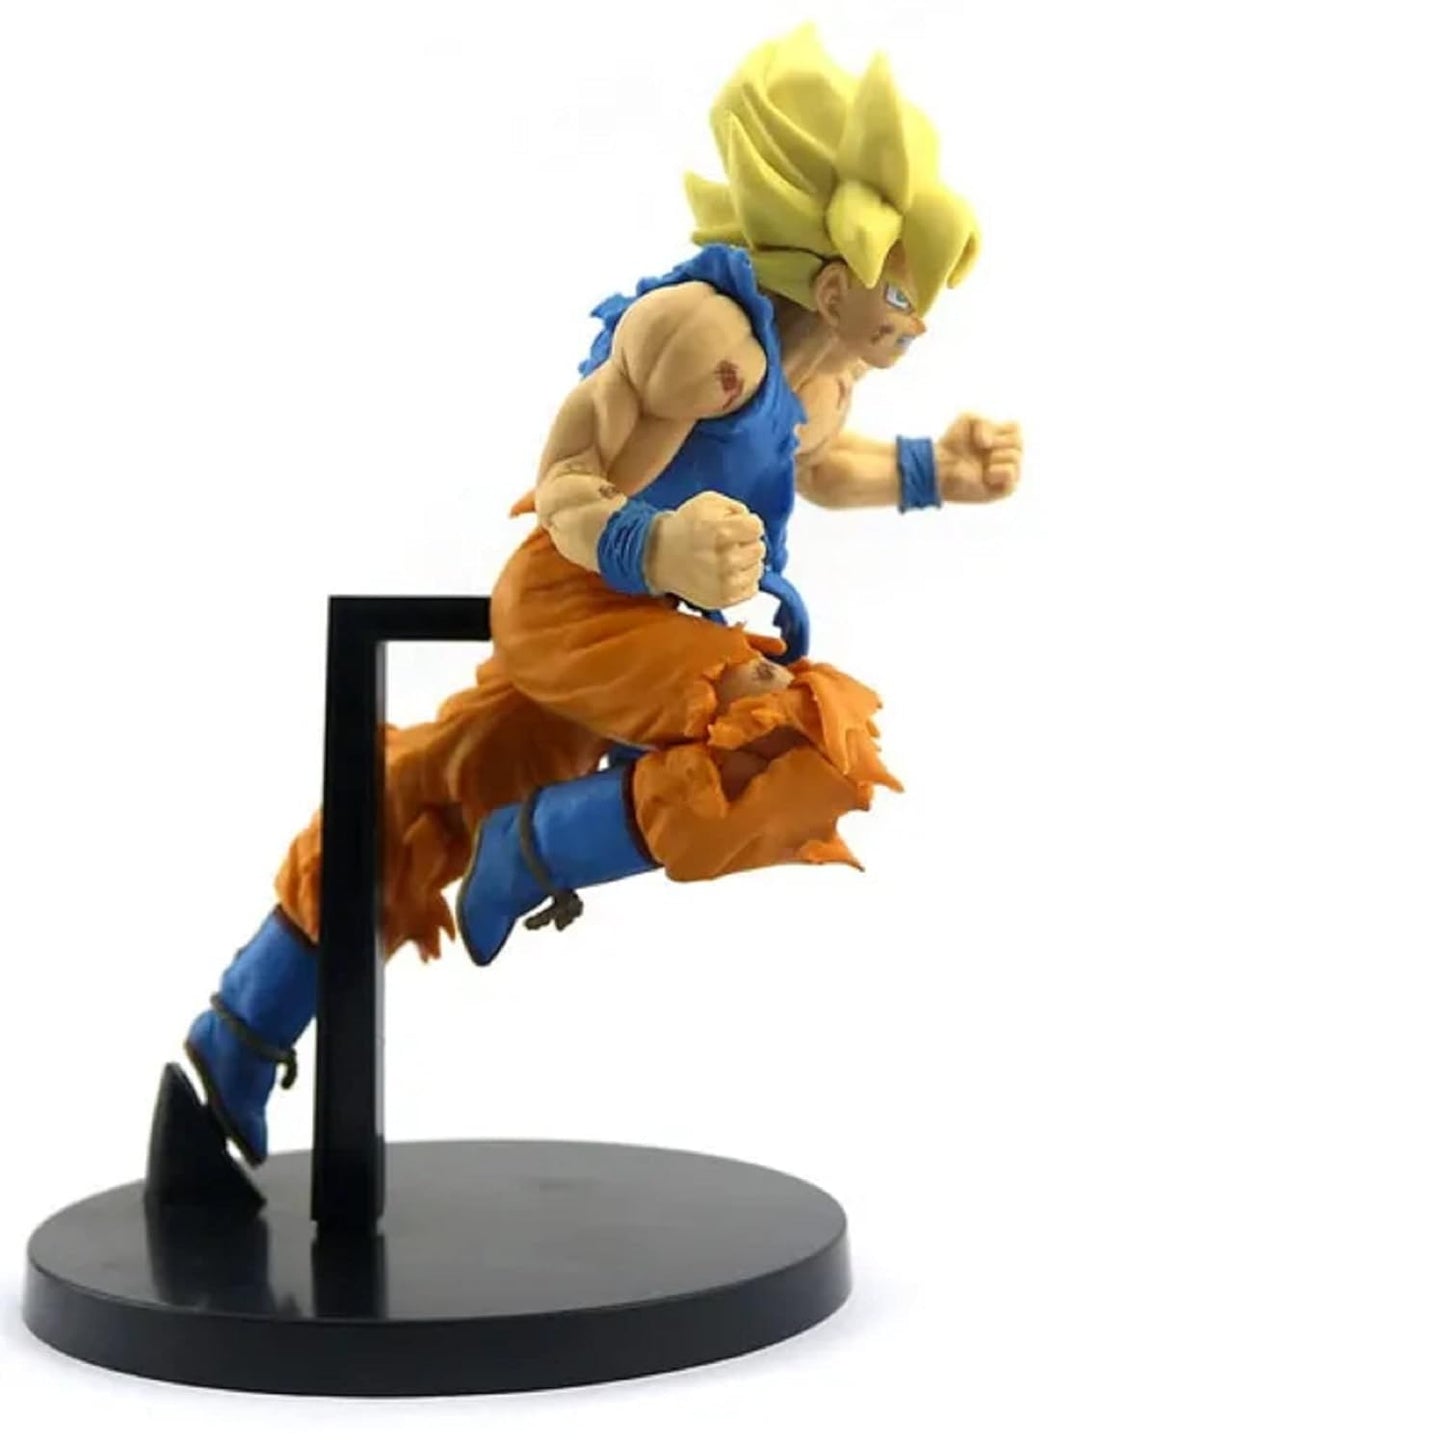 Dragon BallZ Super Saiyan Goku, 21 cm - Super Jumping Action Figure, Burdock Battle Scene, PVC Anime Collectible, Amazing Gift for DBZ Fans